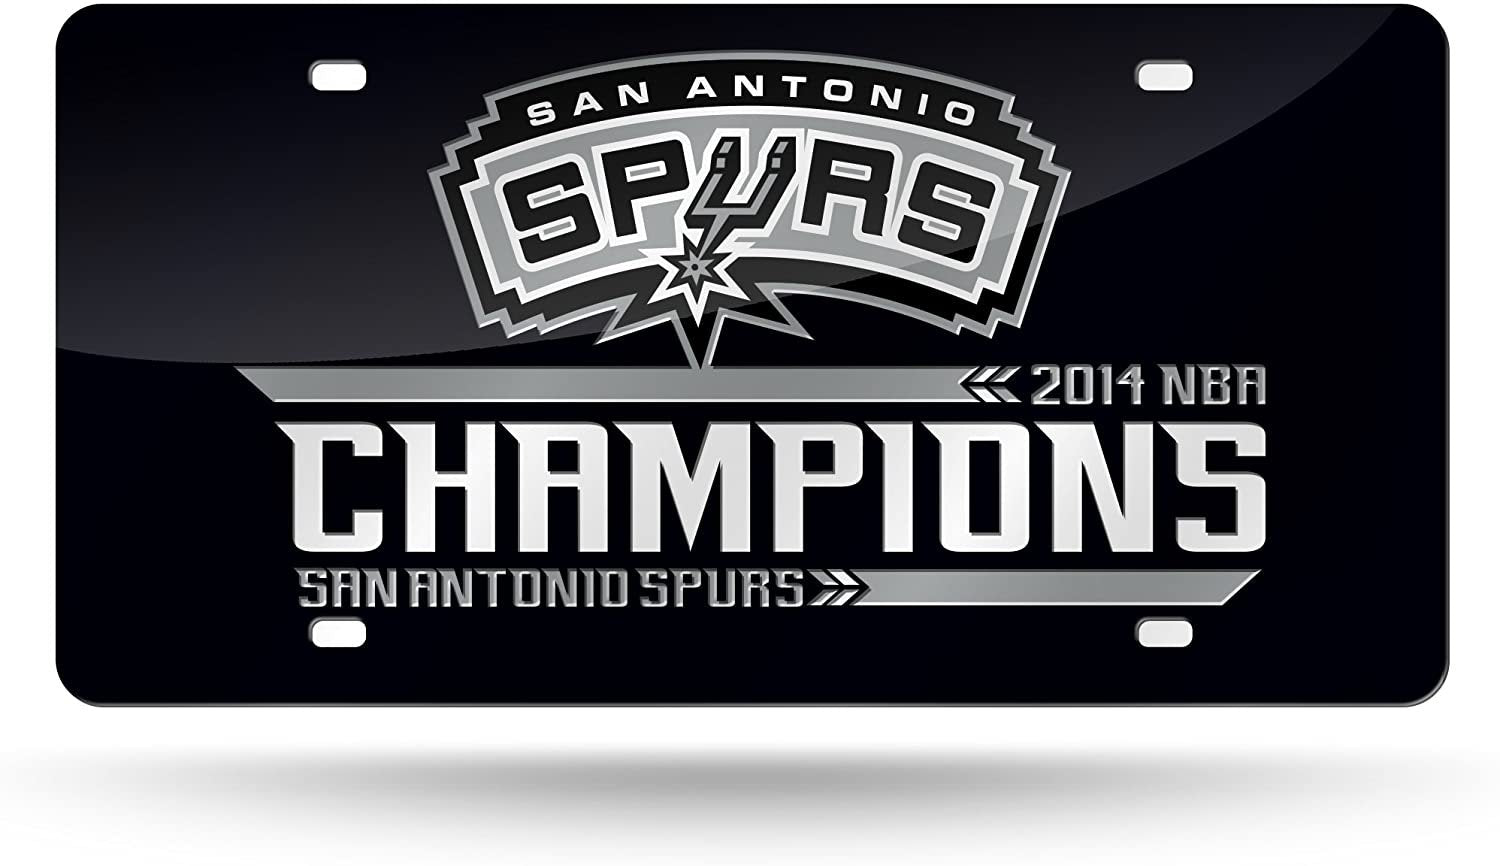 San Antonio Spurs 2014 Champions Premium Laser Cut Tag License Plate, Mirrored Acrylic Inlaid, 6x12 Inch